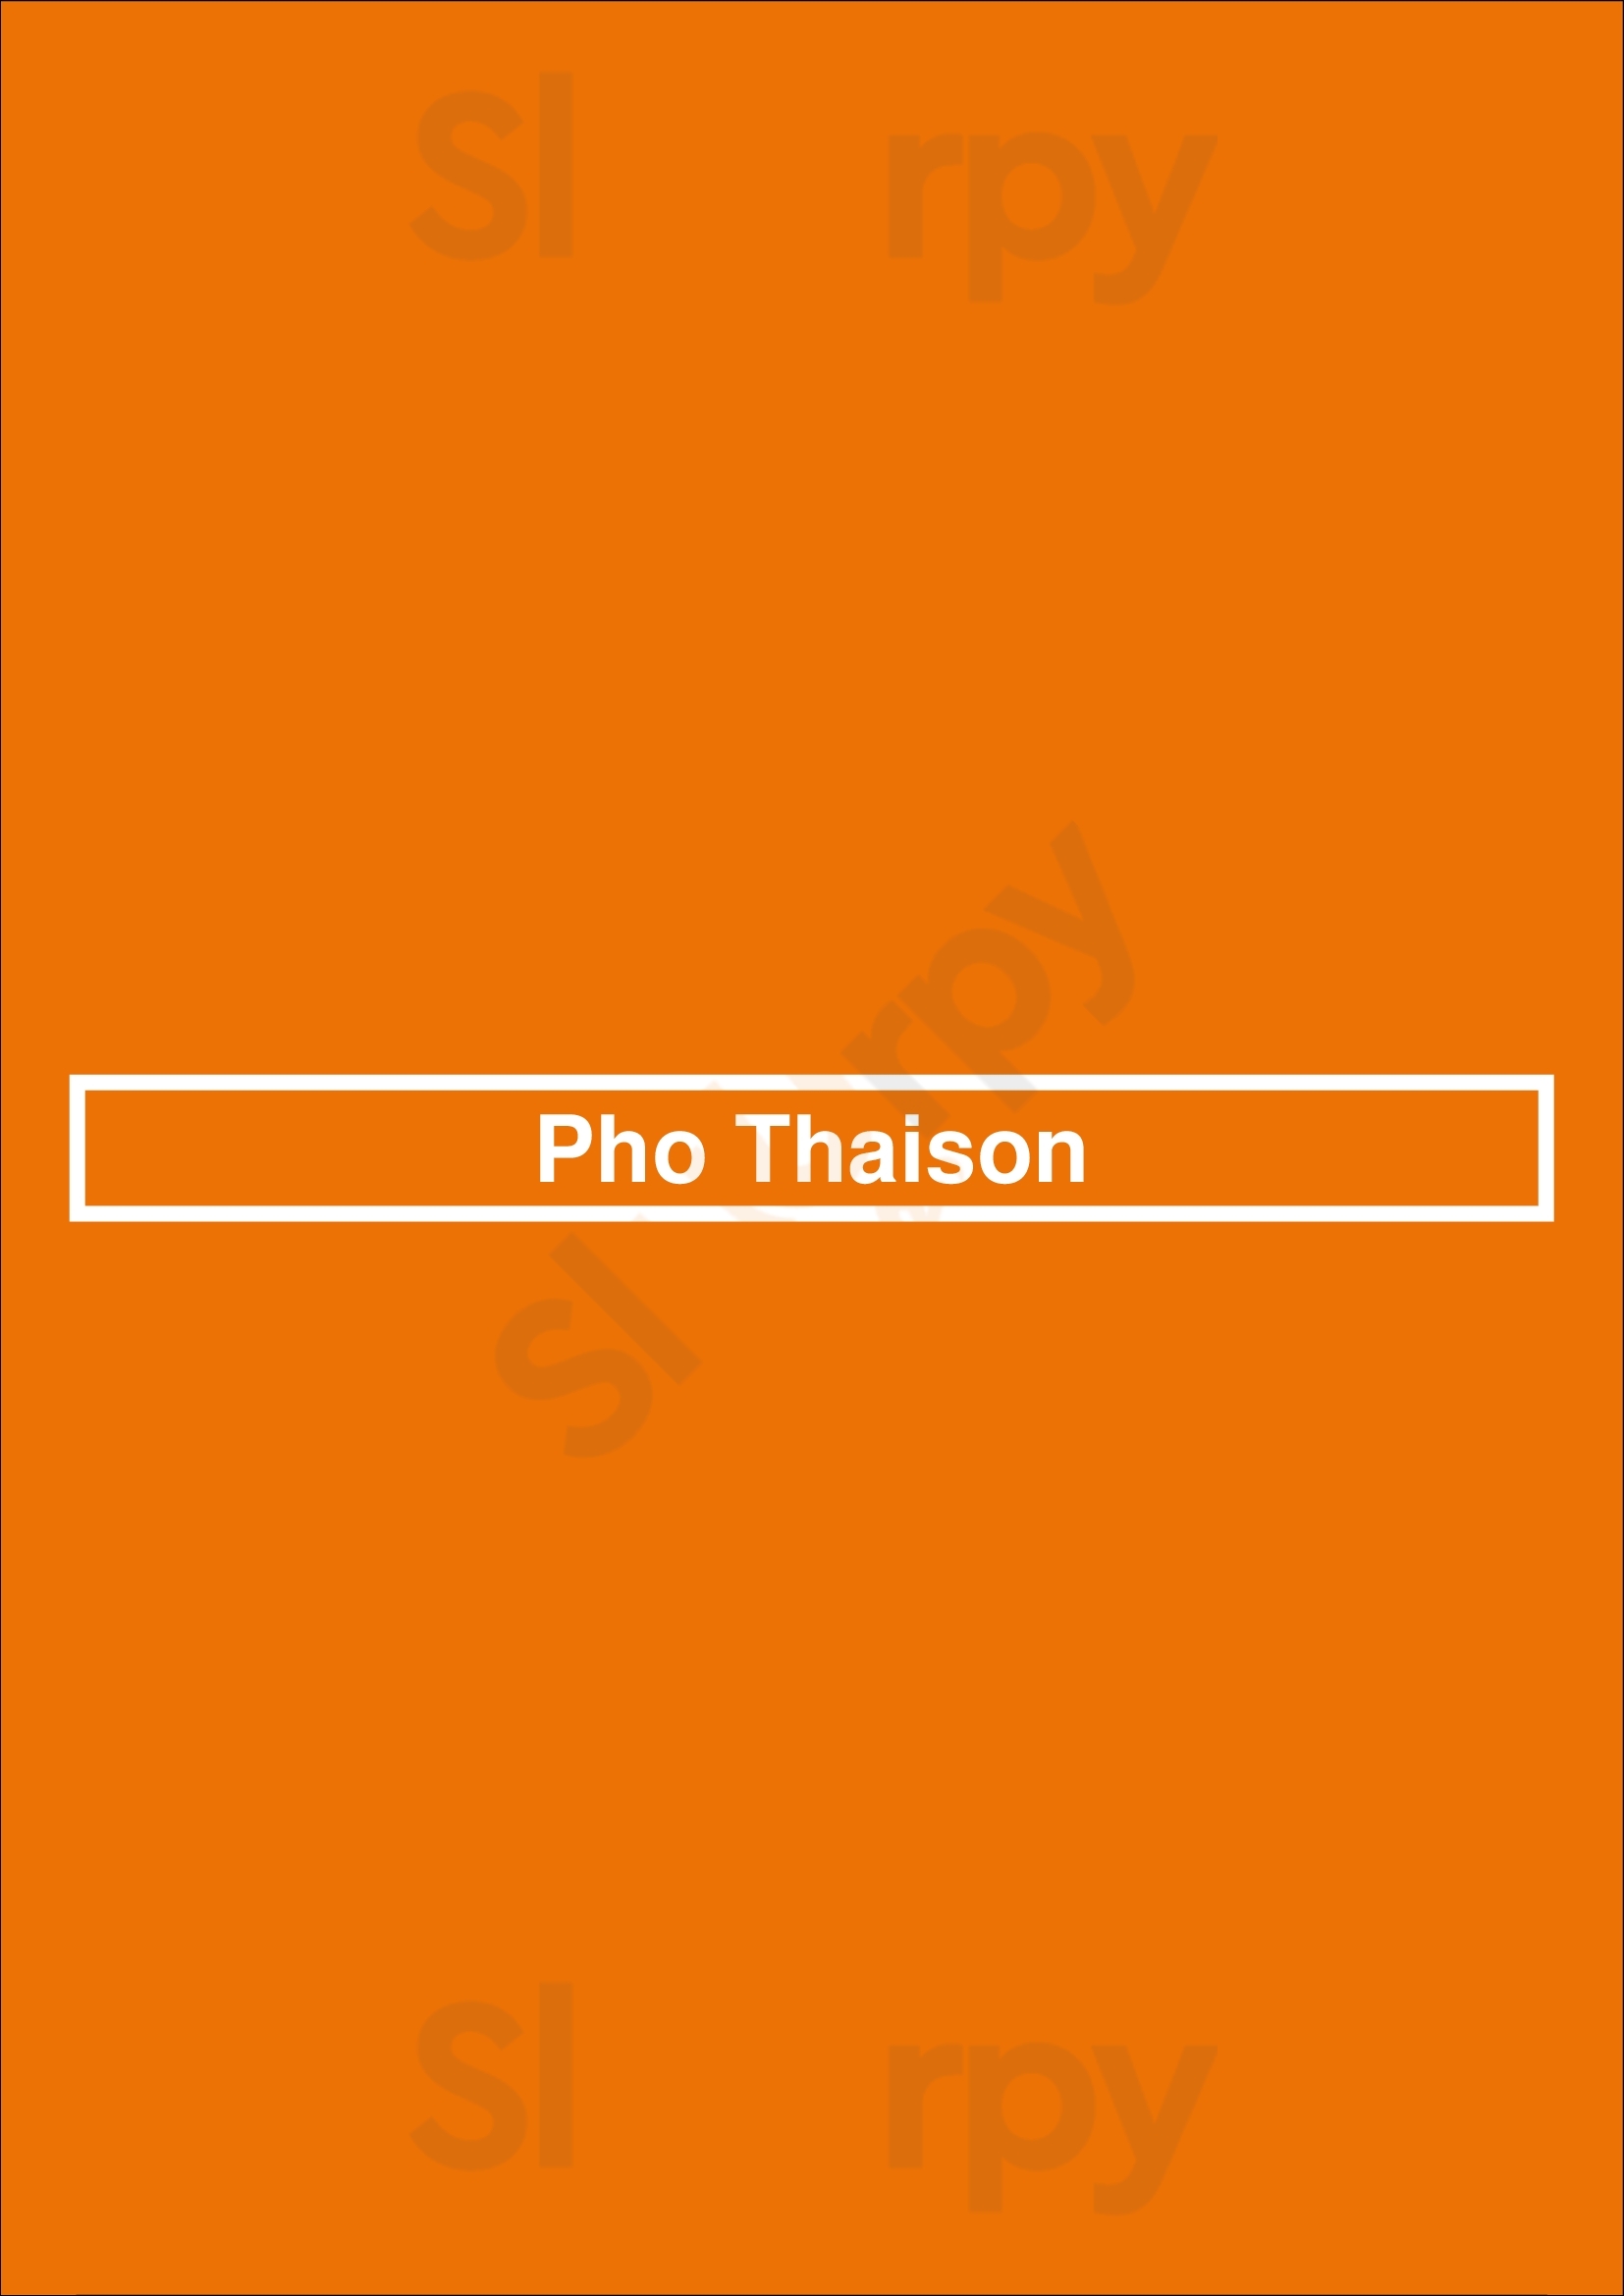 Pho Thaison Austin Menu - 1